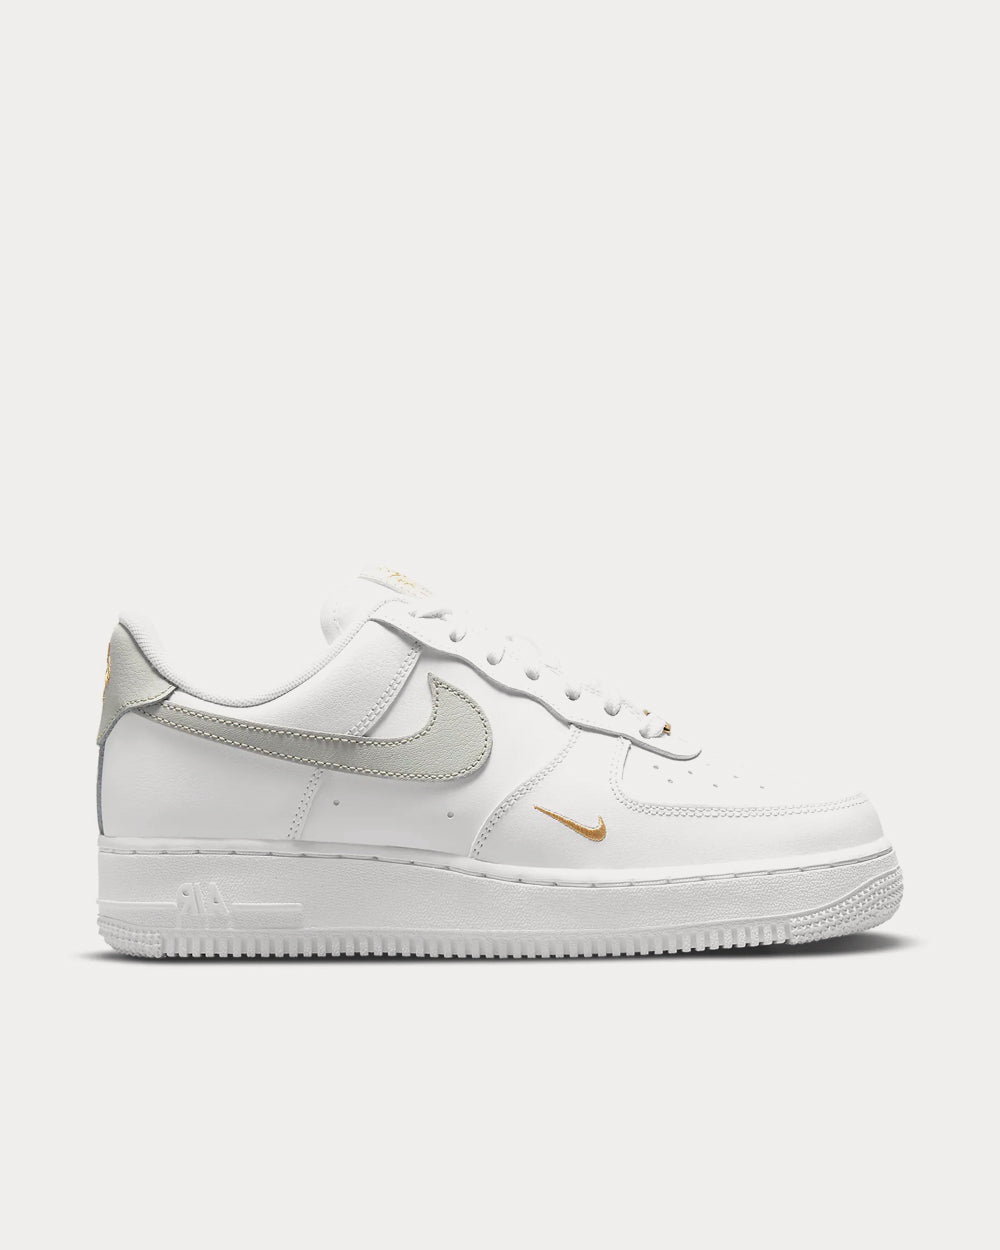 mero Deliberar Anémona de mar Nike Air Force 1 '07 Essential White / Light Silver Low Top Sneakers -  Sneak in Peace